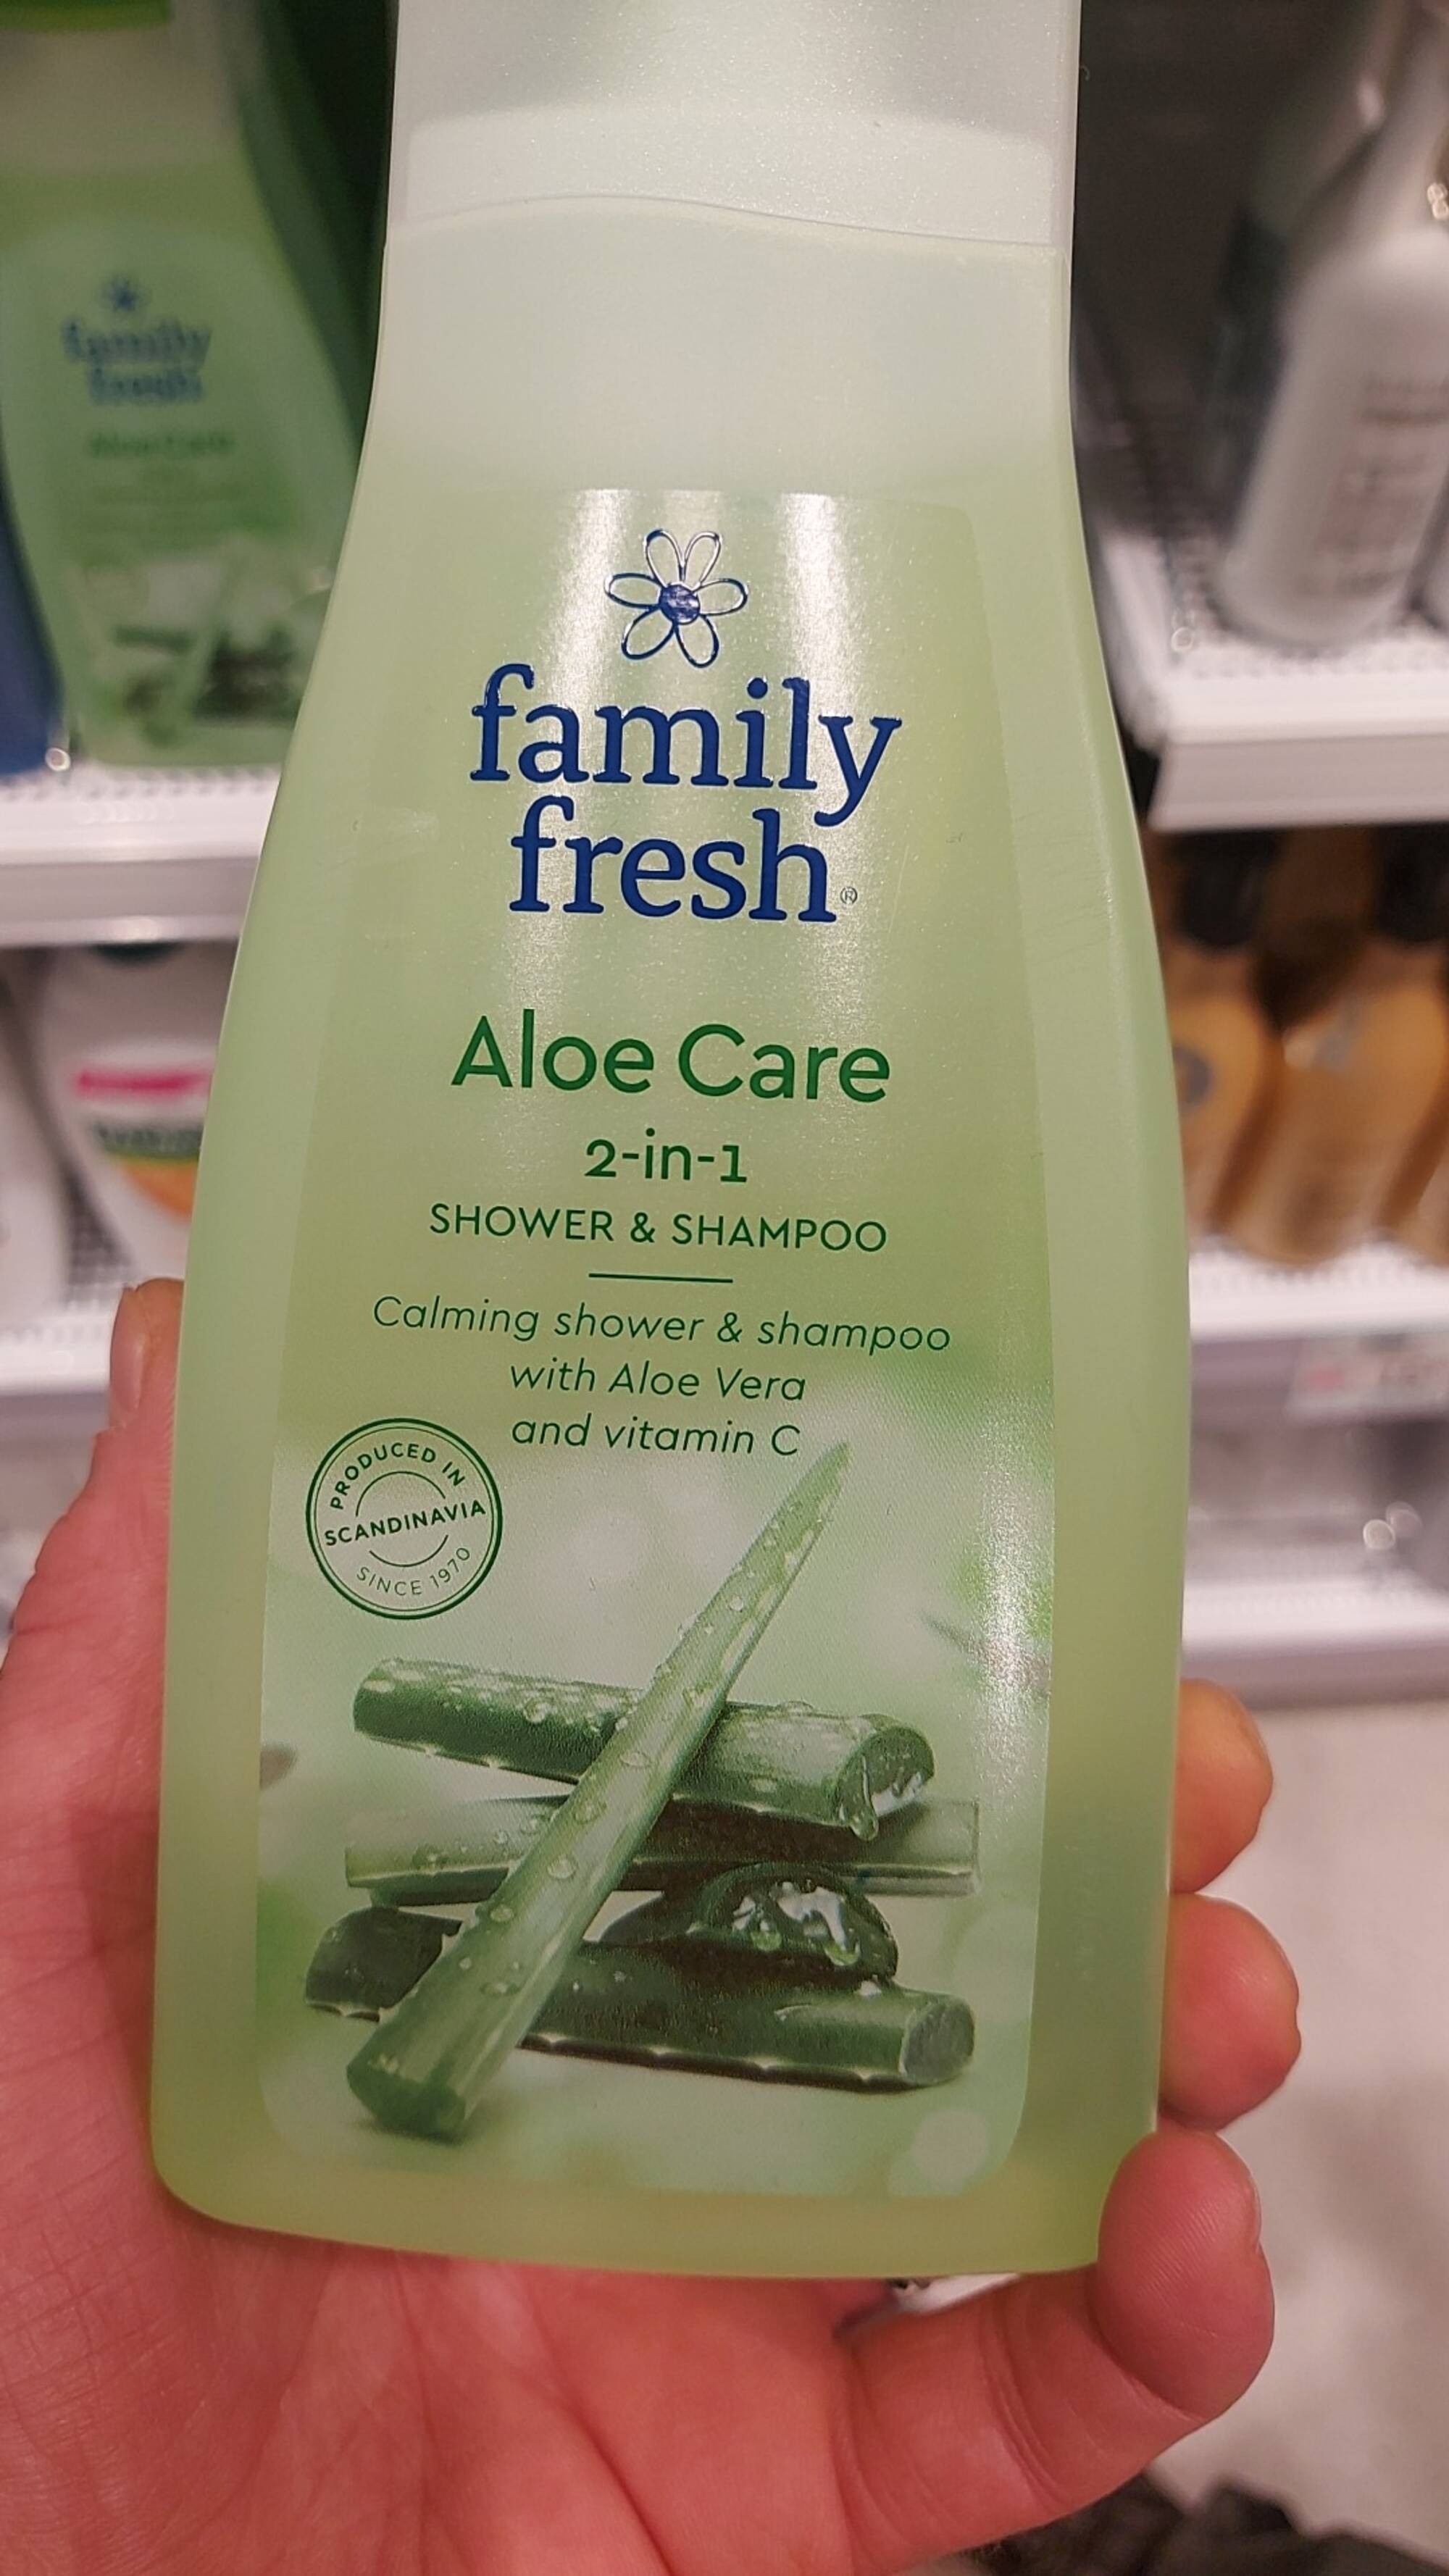 FAMILY FRESH - Aloe Care - 2-in-1 Shower & shampoo